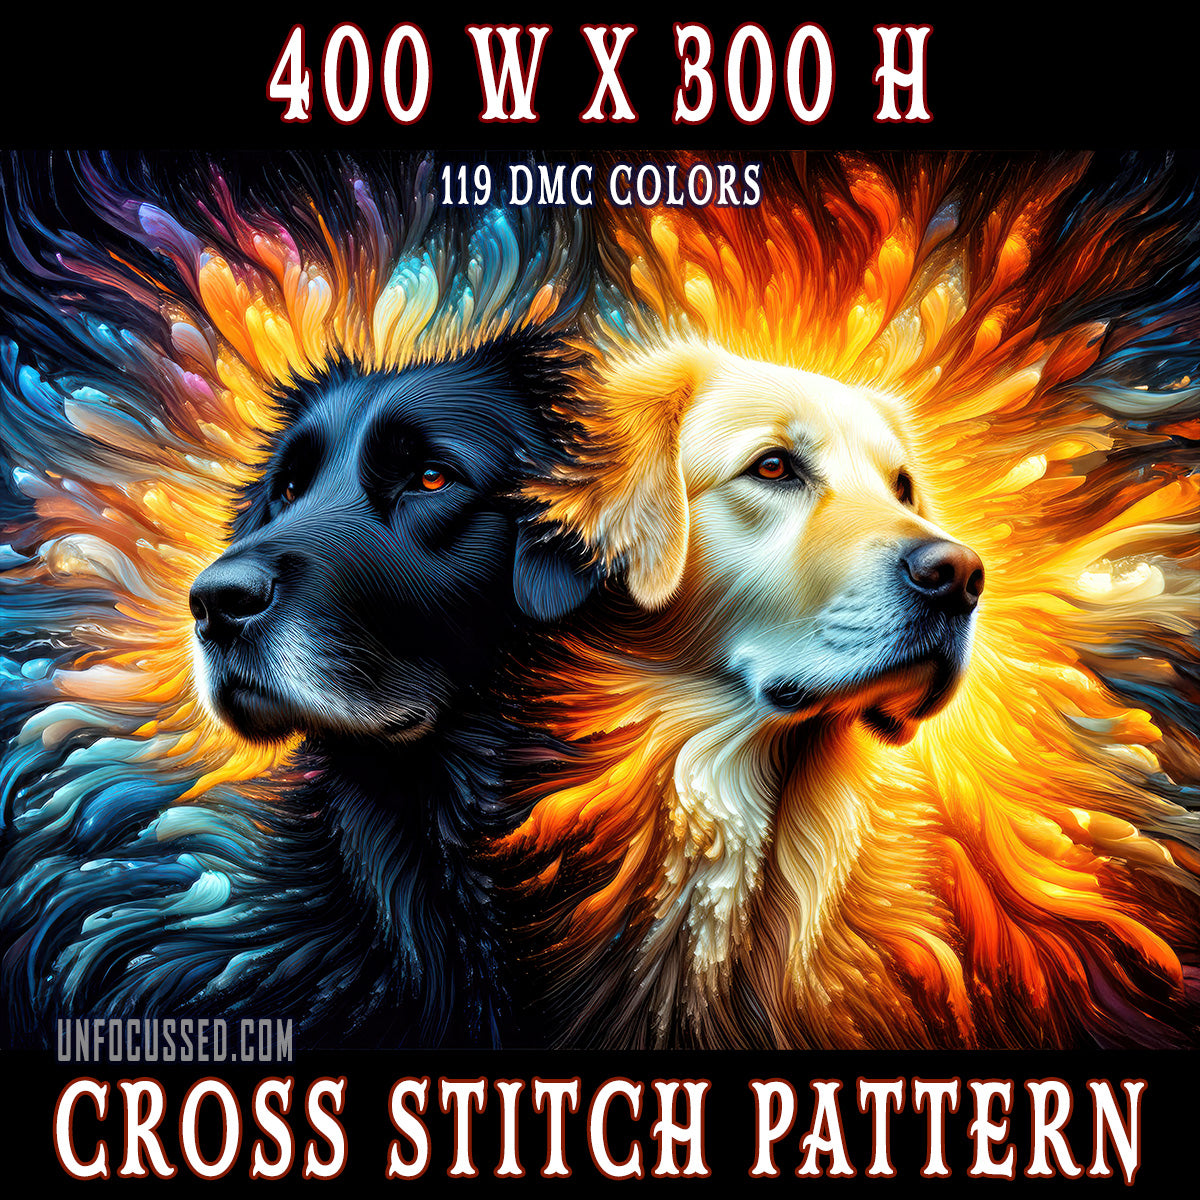 A Canine Duality Cross Stitch Pattern